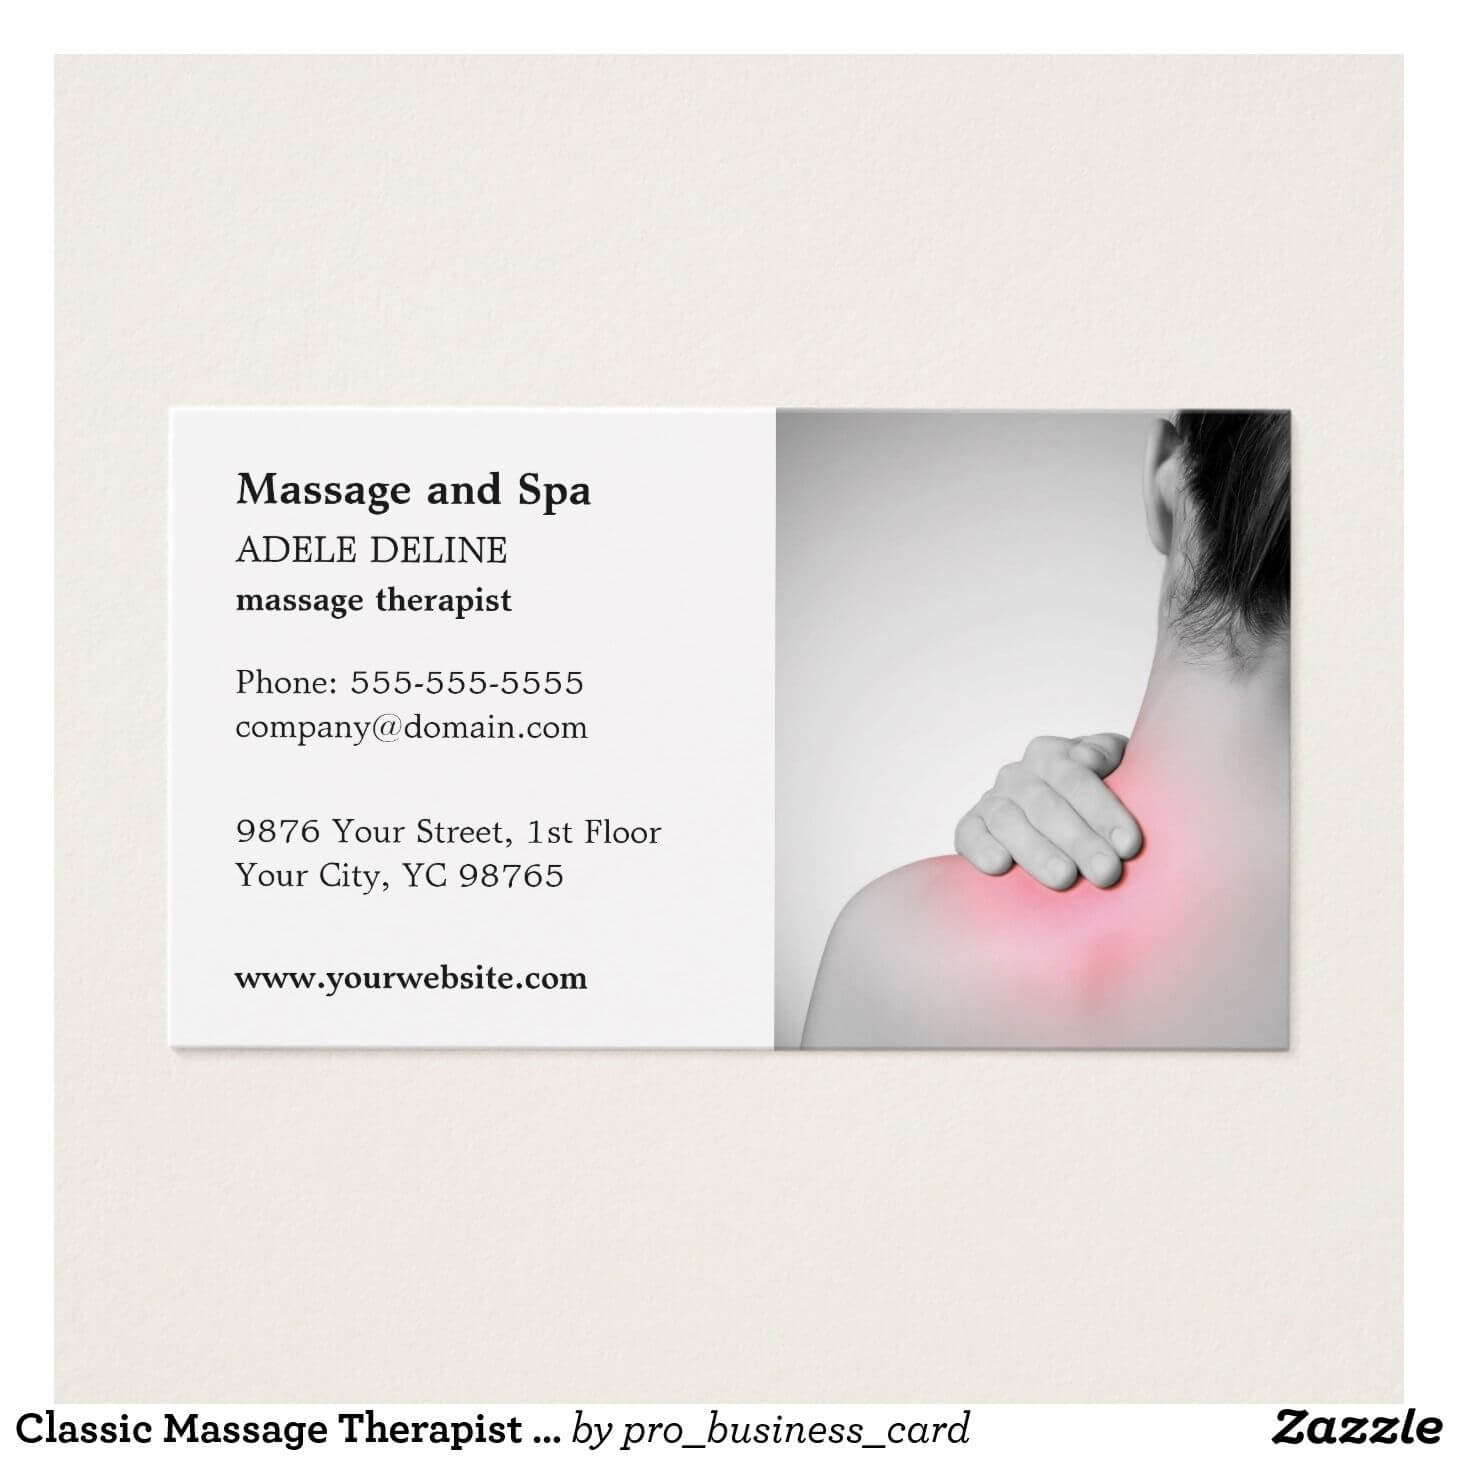 Classic Massage Therapist Business Card Template | Business For Massage Therapy Business Card Templates